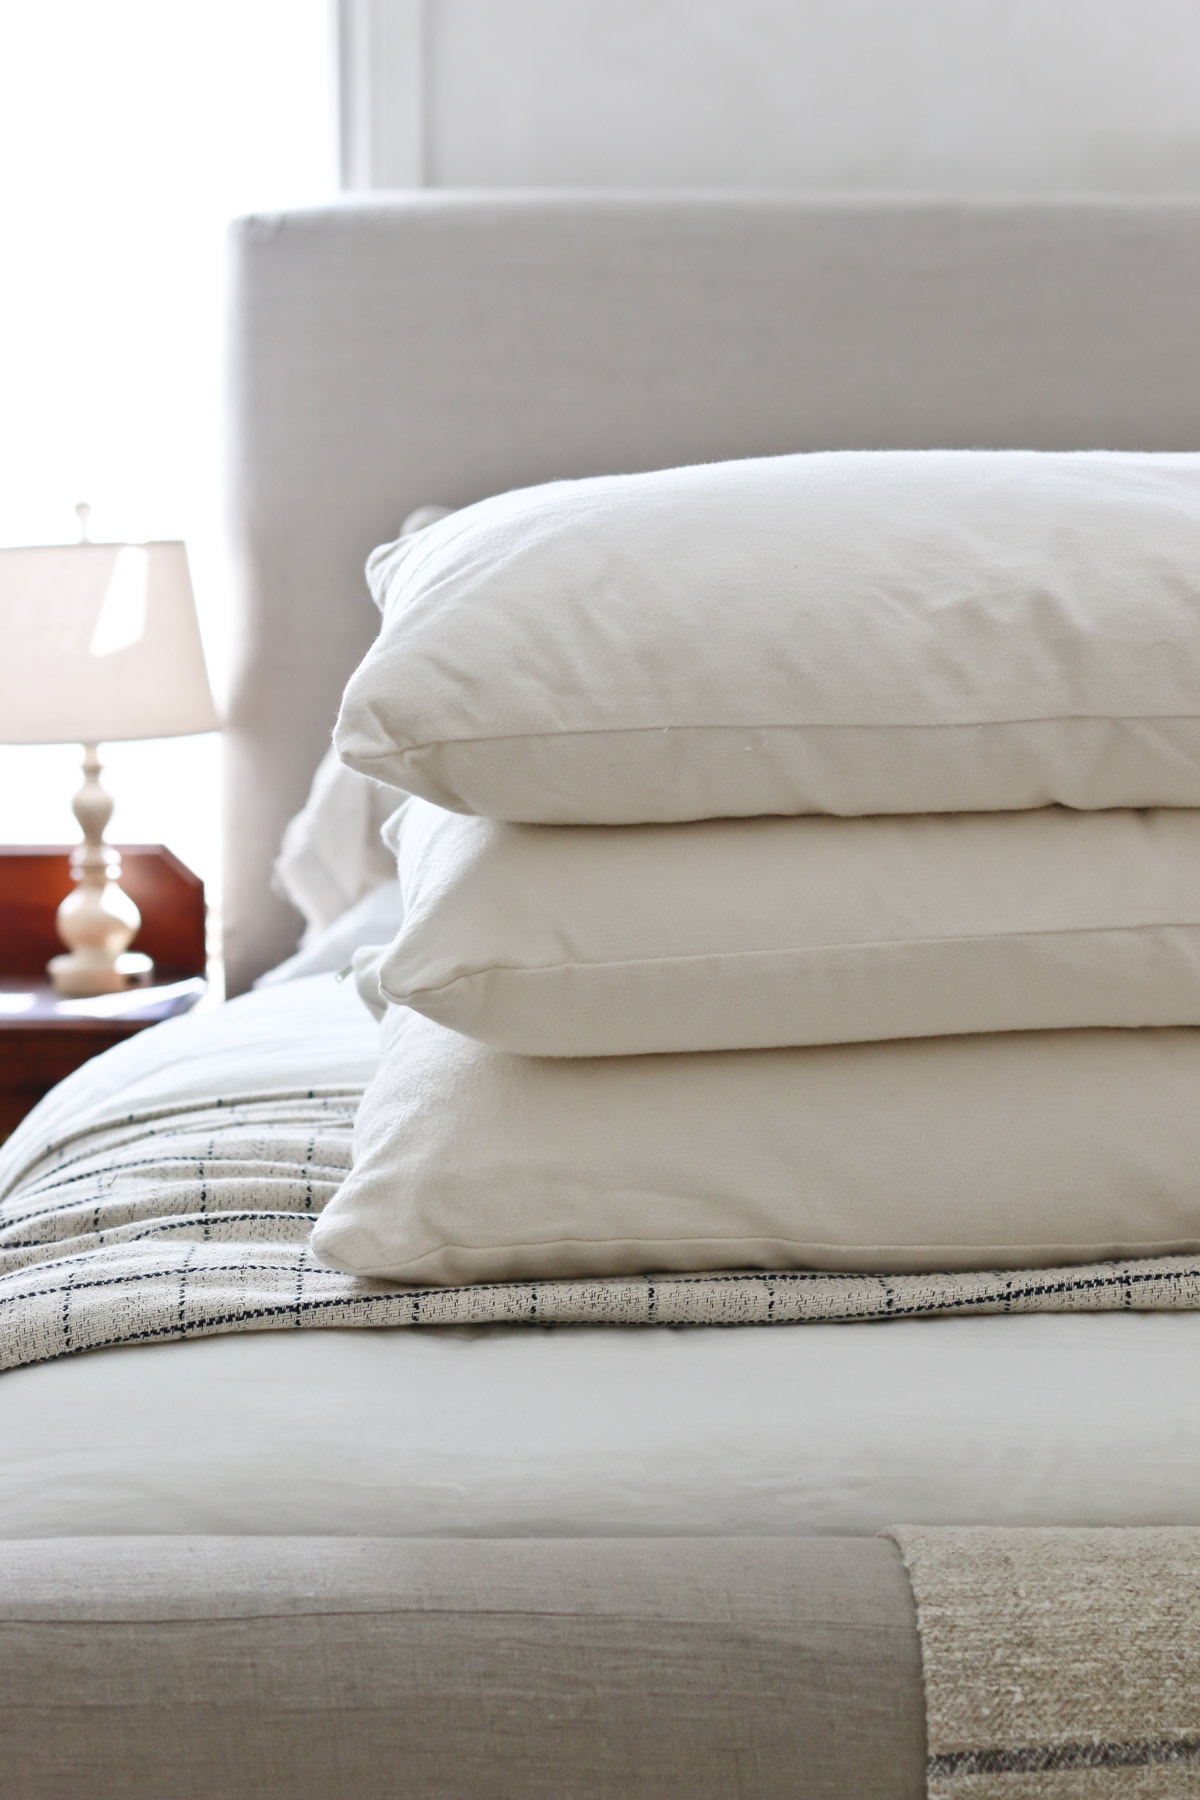 3 organic side sleeper pillows to consider